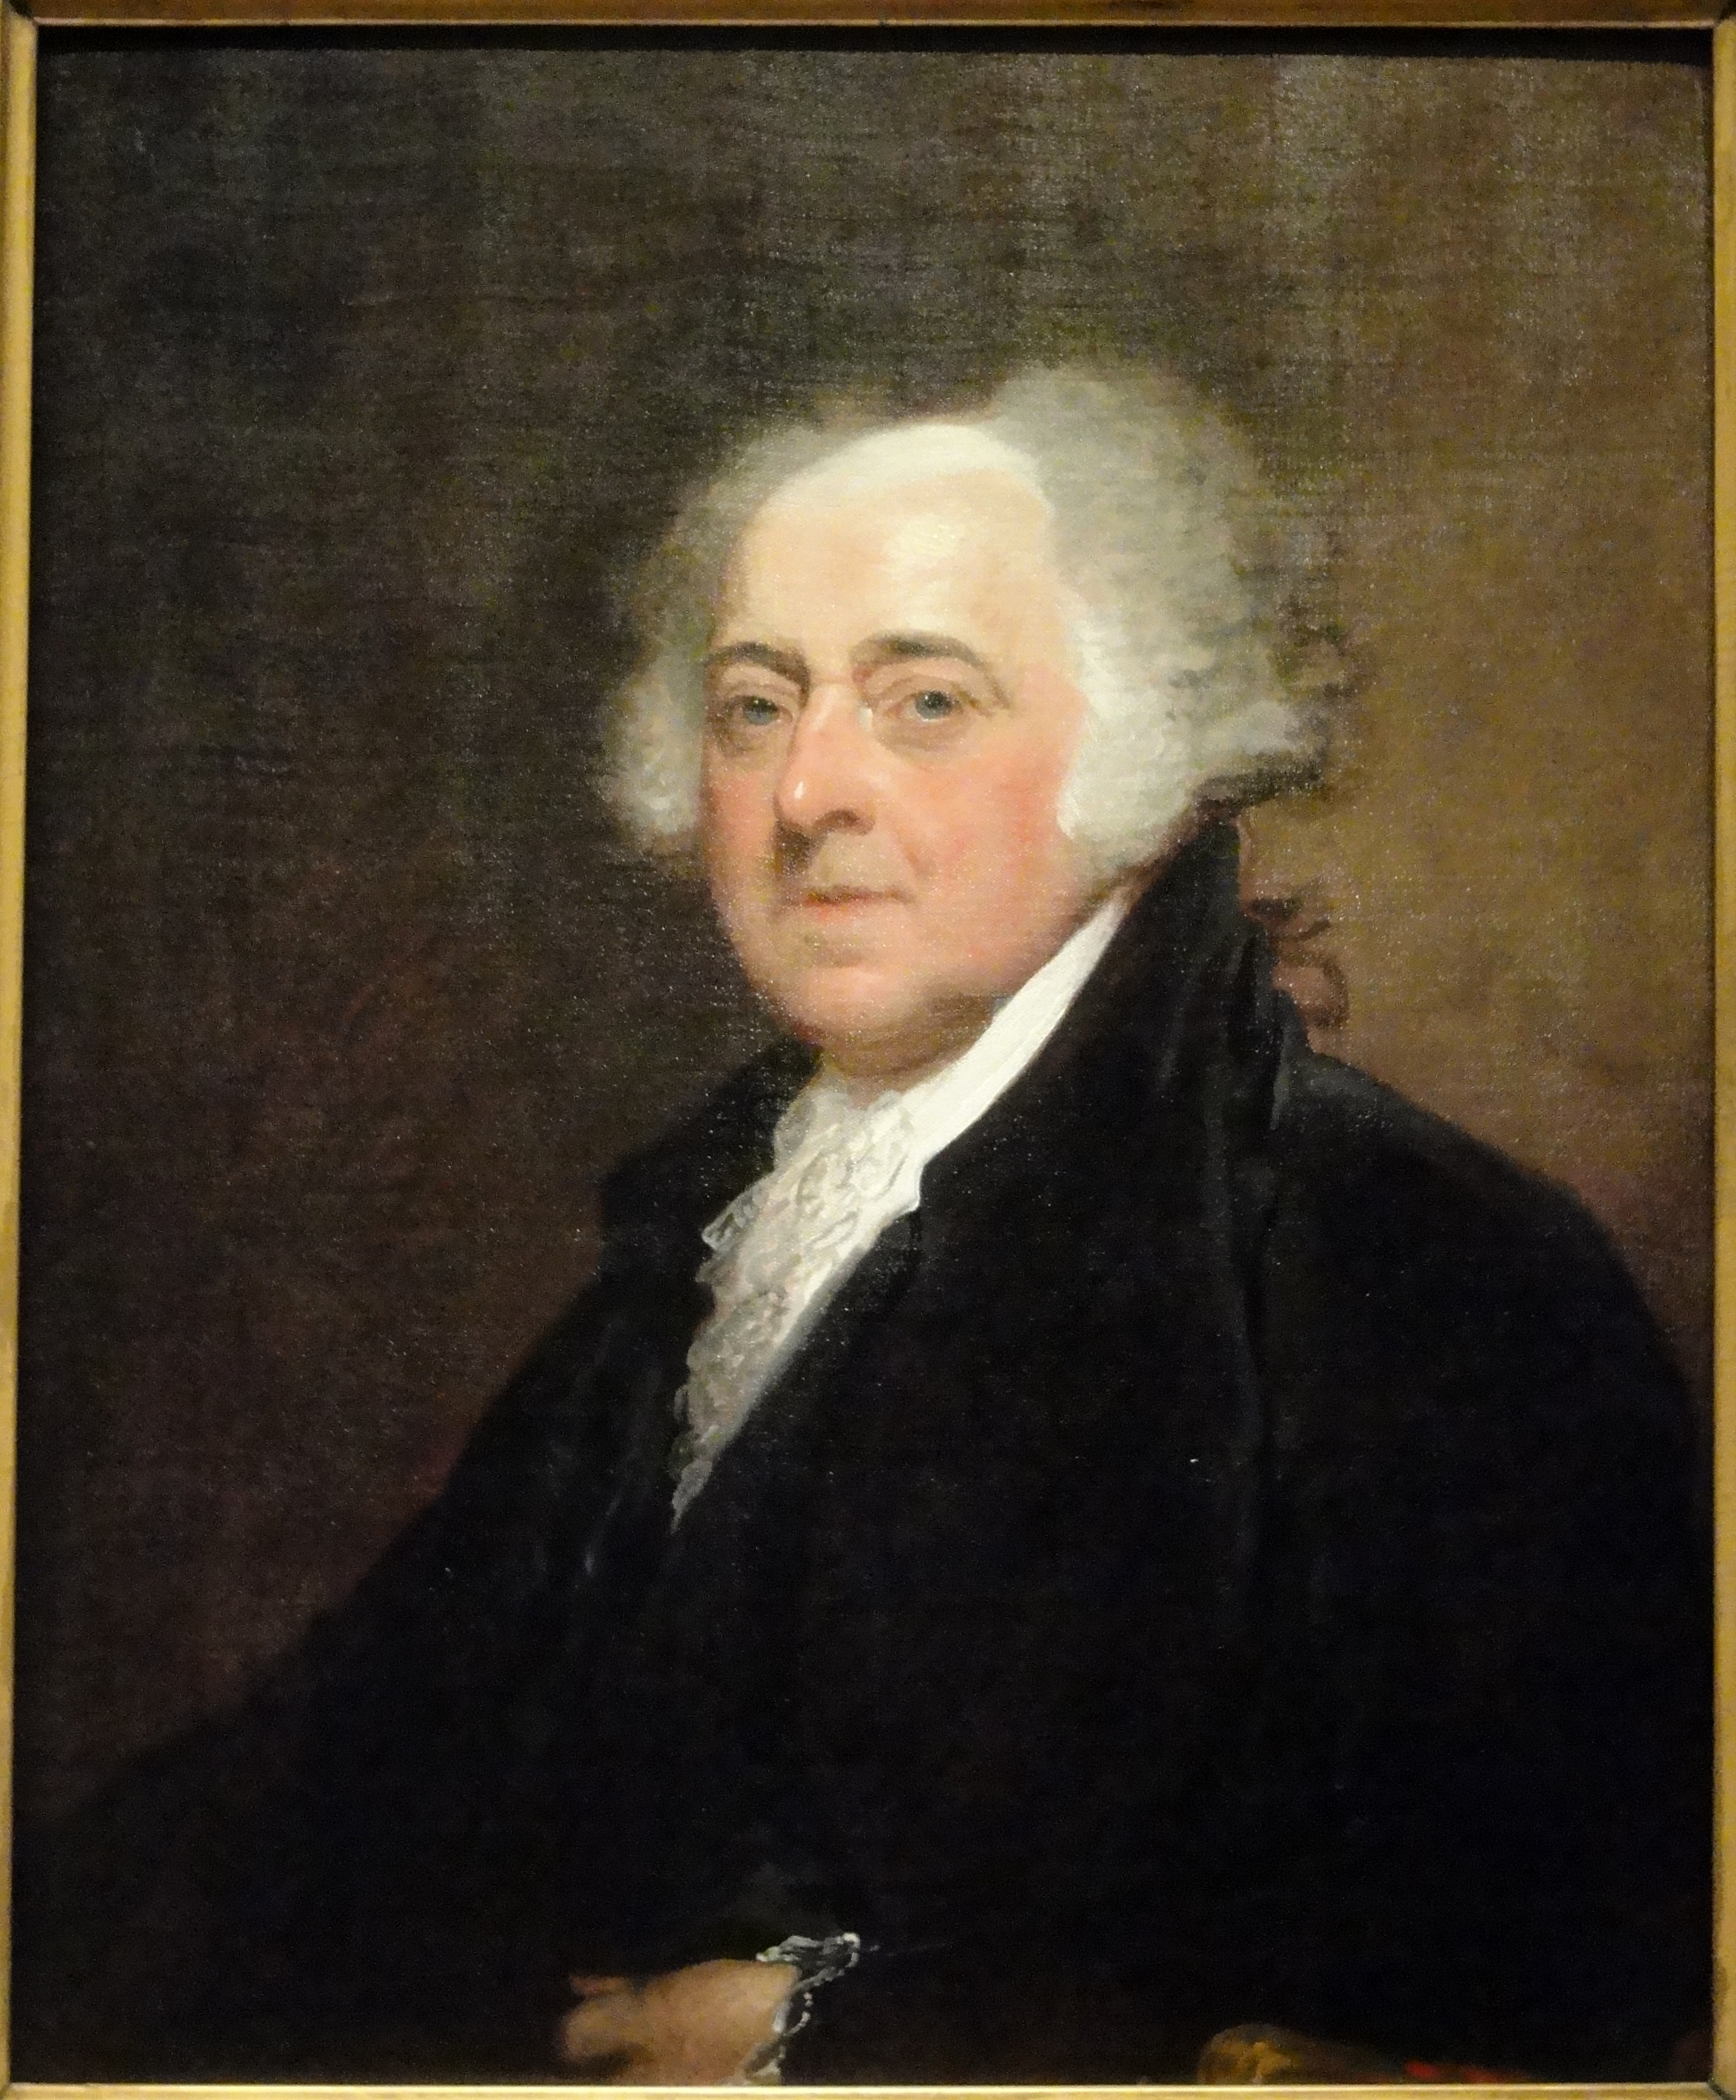 Image John Adams by Gilbert Stuart, c. 18001815, oil on canvas